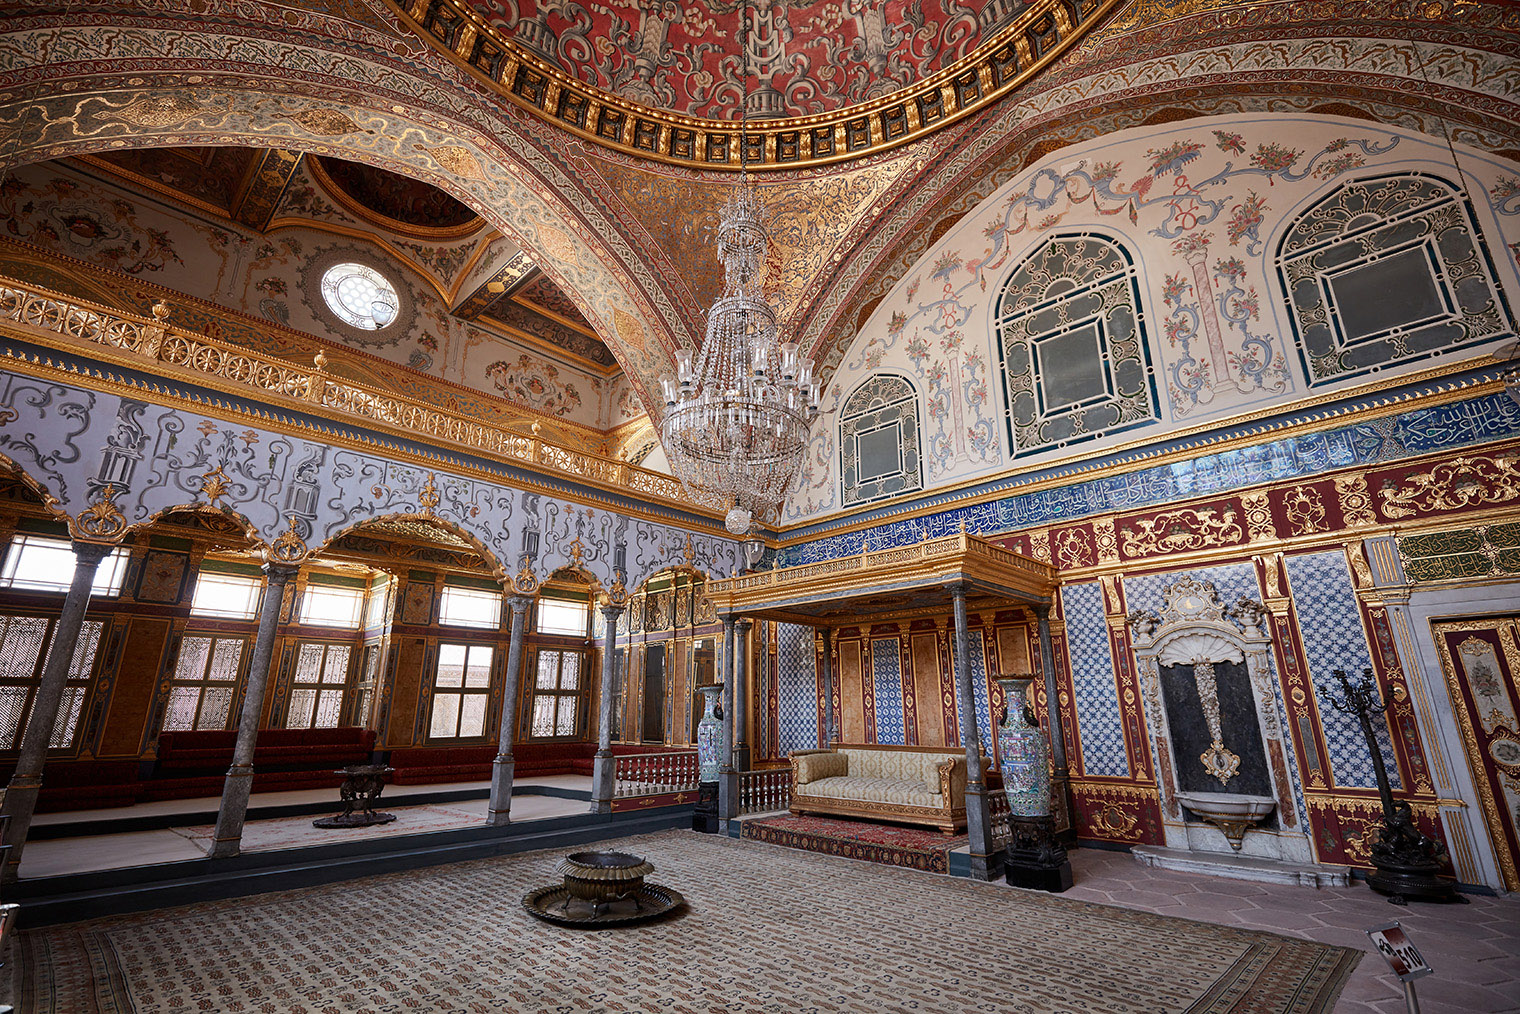 Комната правителя во дворце. Фотография: di_ryan / Shutterstock